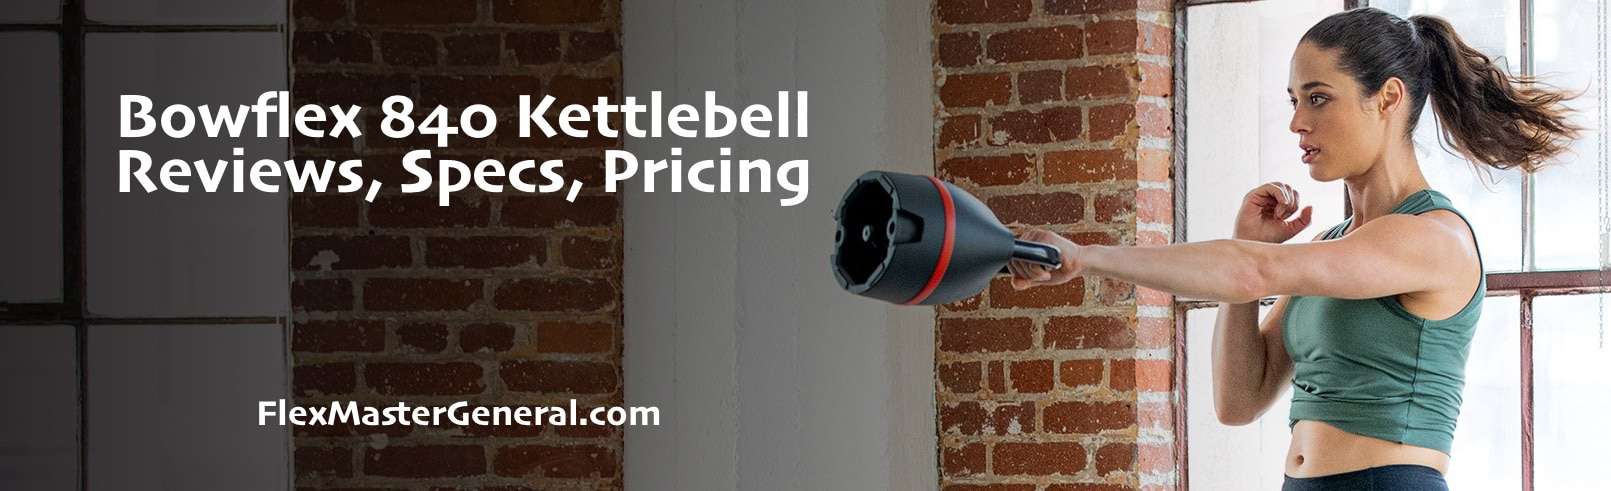 FlexMasterGeneral reviews the new Bowflex 840 adjustable kettlebells